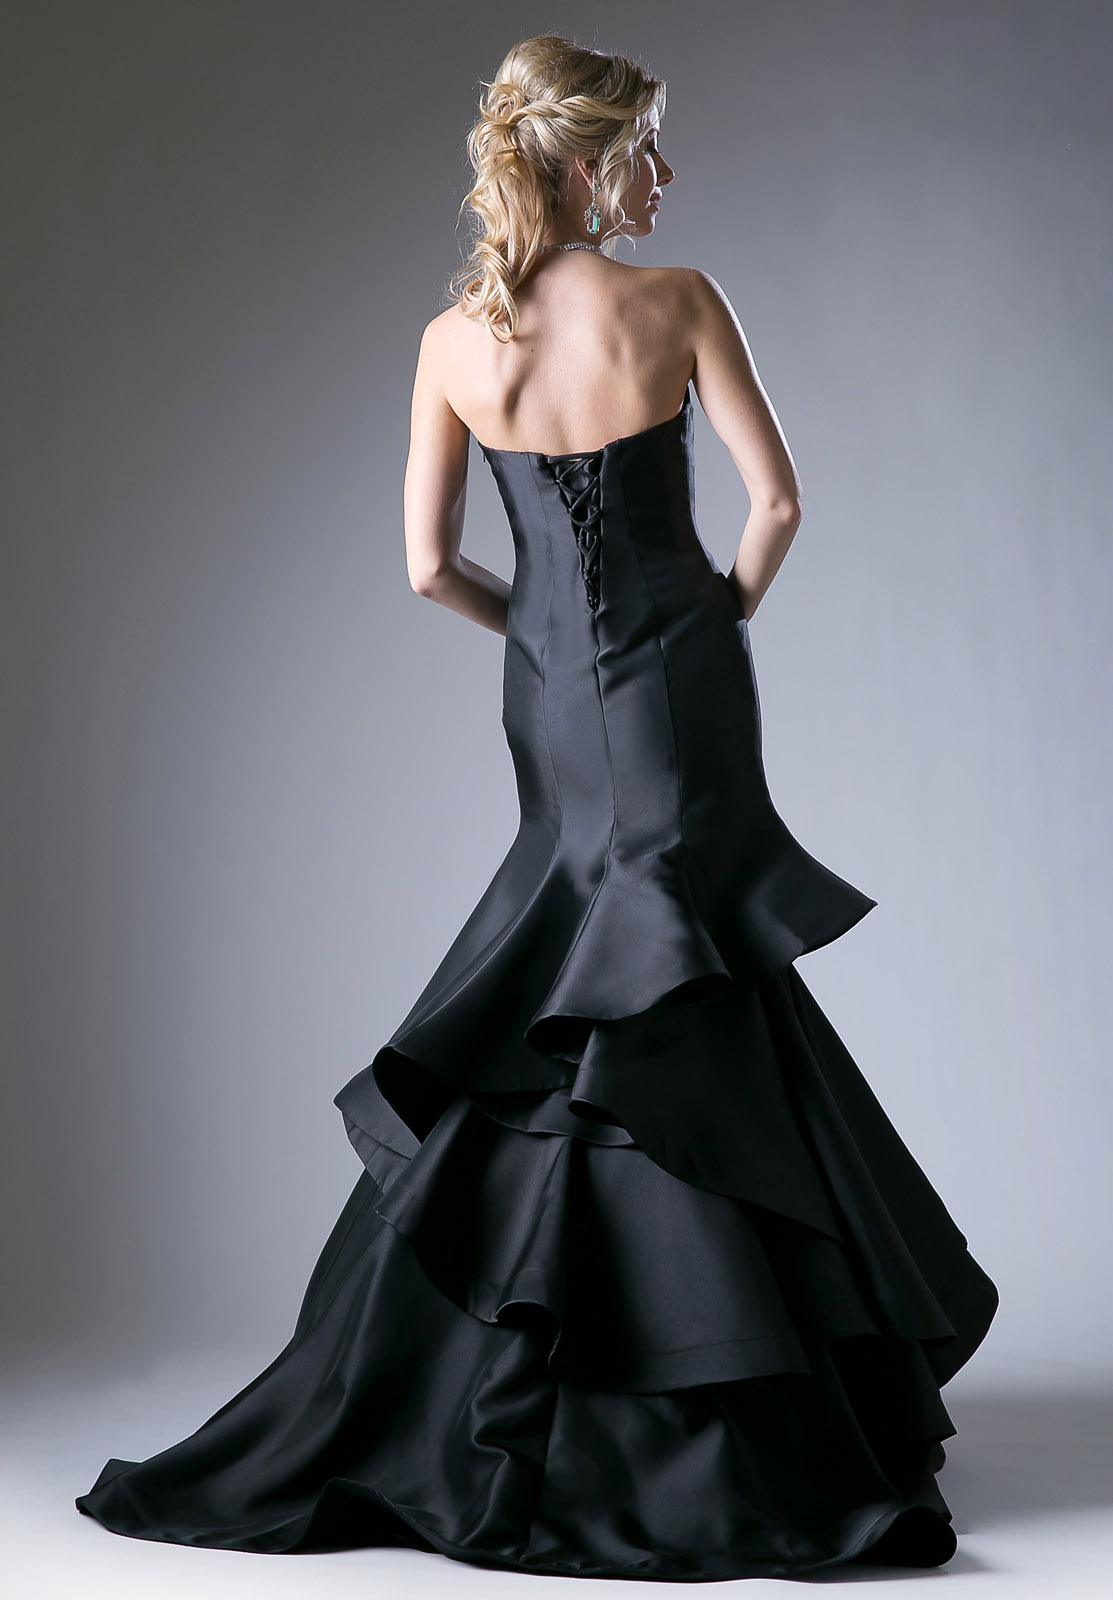 black strapless bridesmaid dresses